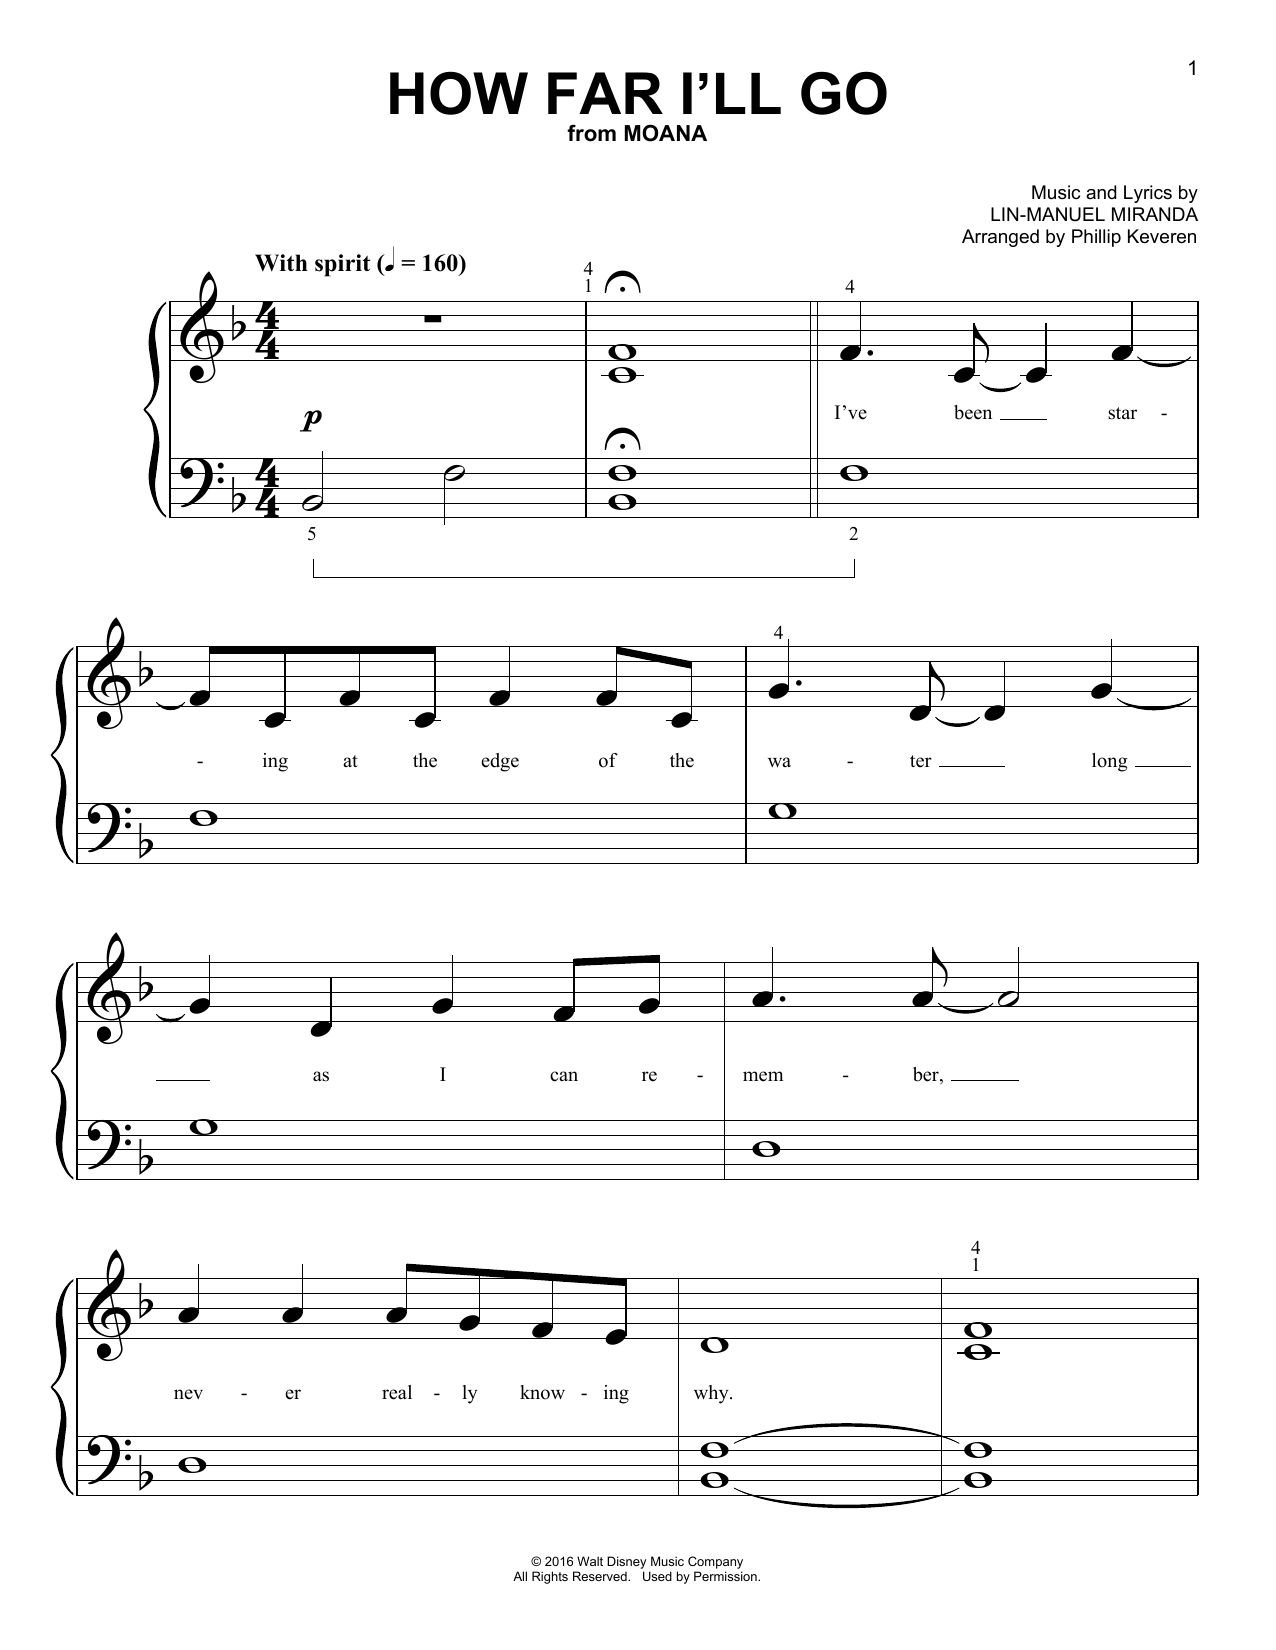 Lin-Manuel Miranda "How Far I'll Go (from Moana) (arr. Phillip Keveren)" Sheet Music PDF Notes, Chords | Children Score Big Note Piano Download Printable. 254875